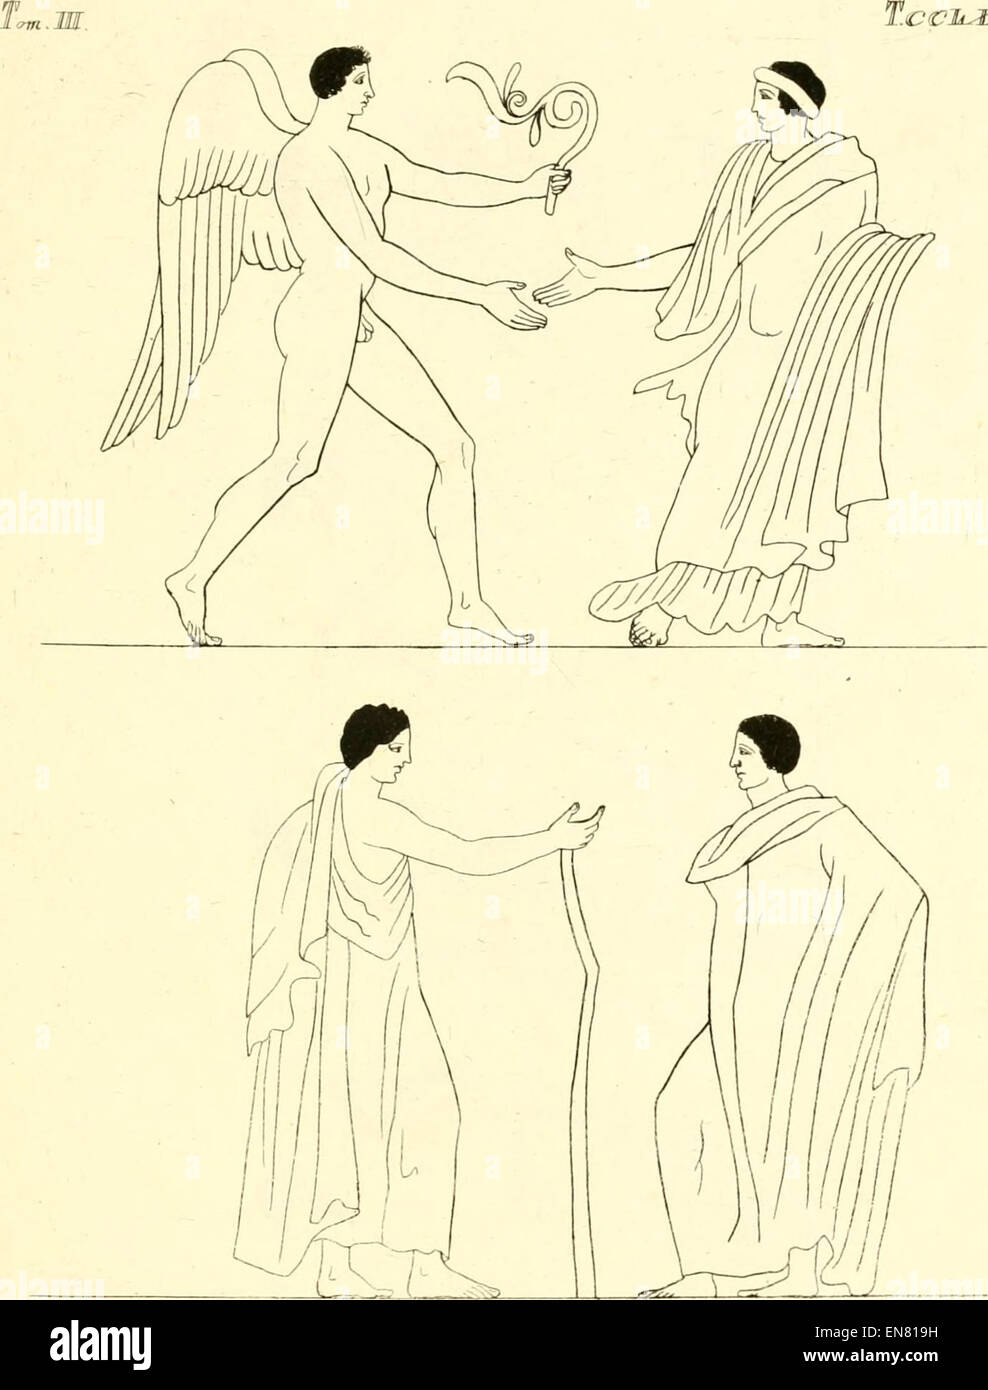 INGHIRAMI(1835) Pitture di vasi fittili Vol3 T281 (14804801243) Stock Photo